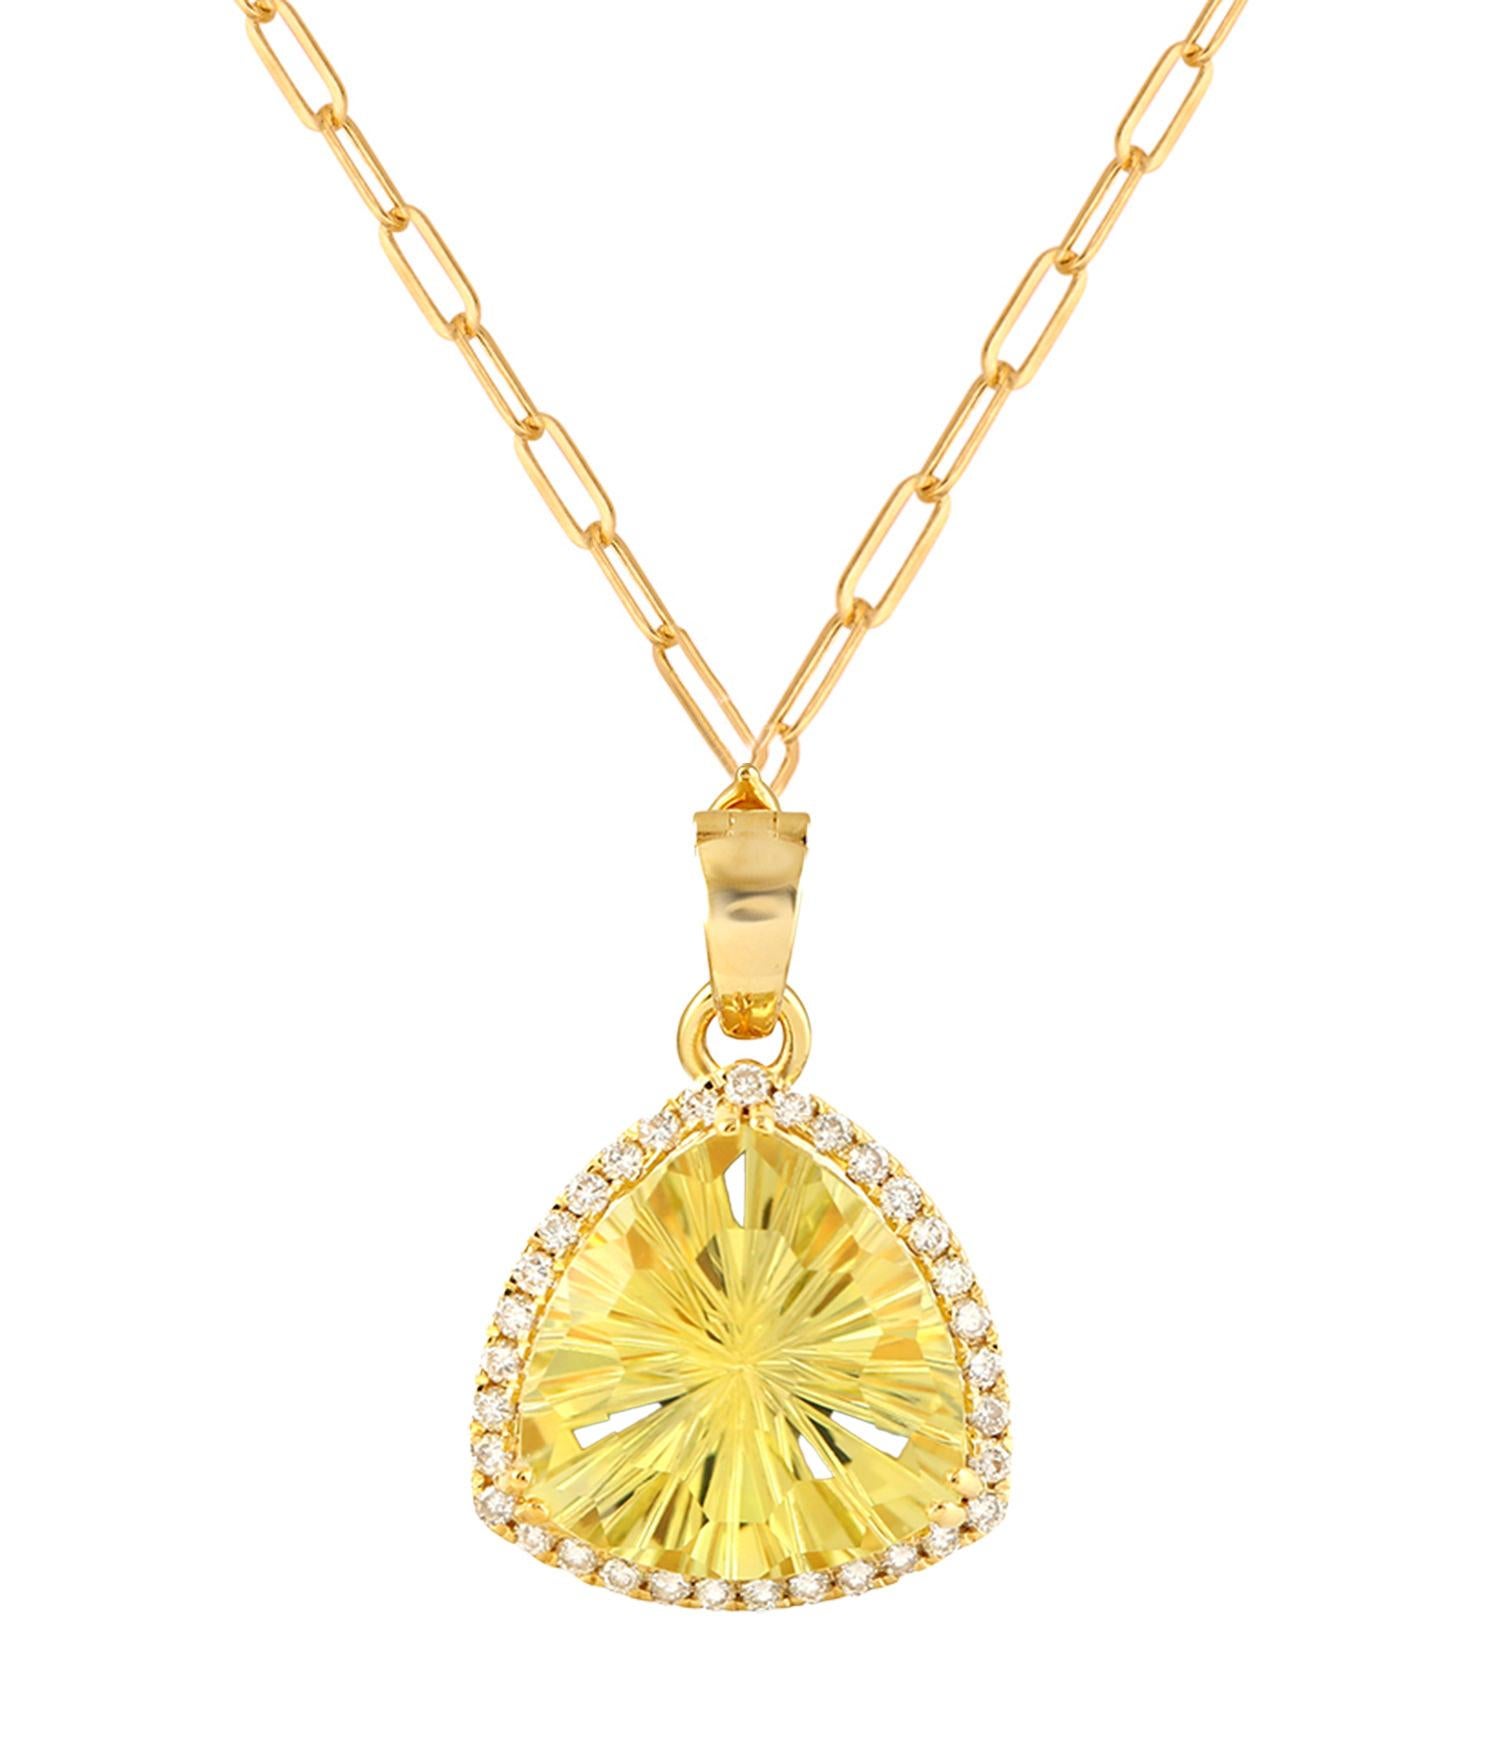 Trillion Cut Yellow Stellar Quartz Pendant Necklace With Diamonds 5.63 Carats 18K Yellow Gold For Sale